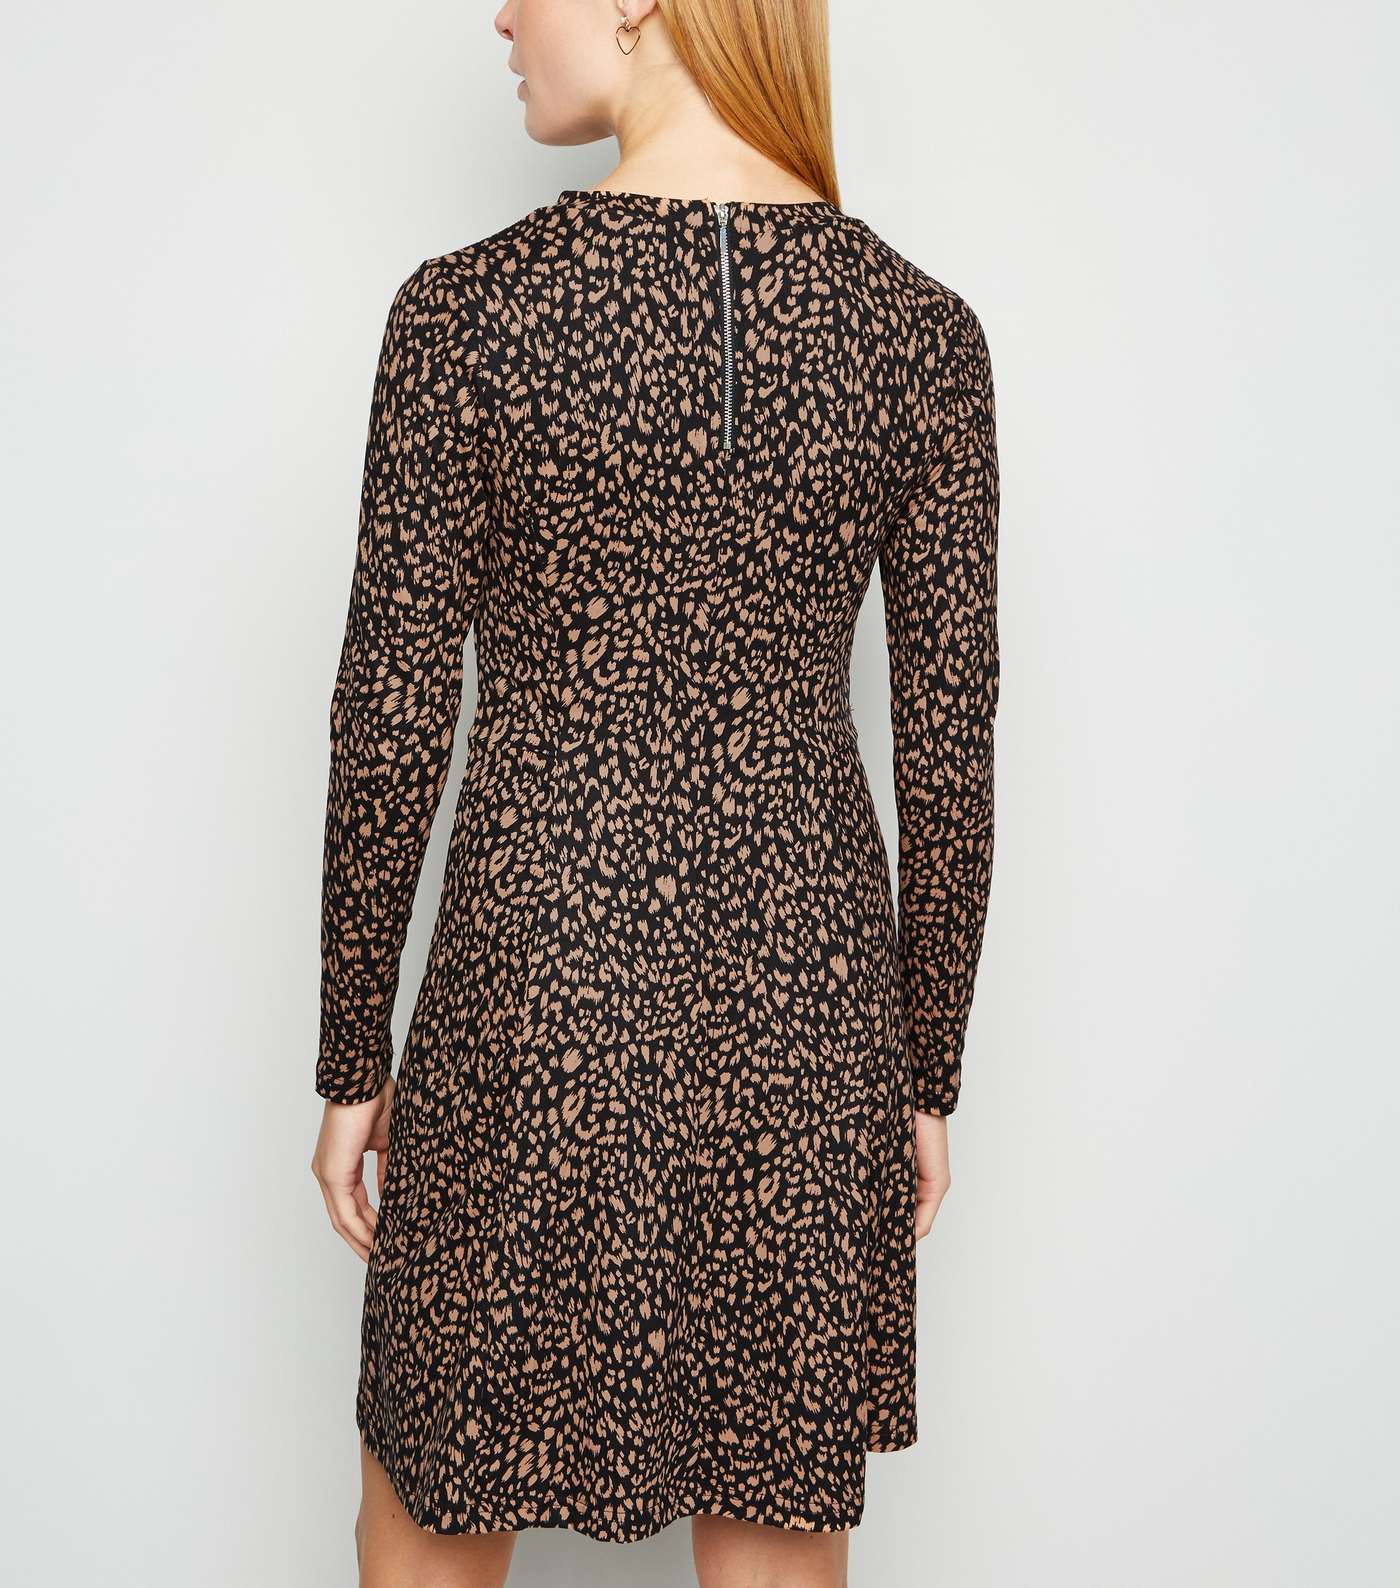 Black Leopard Print Long Sleeve Dress Image 3